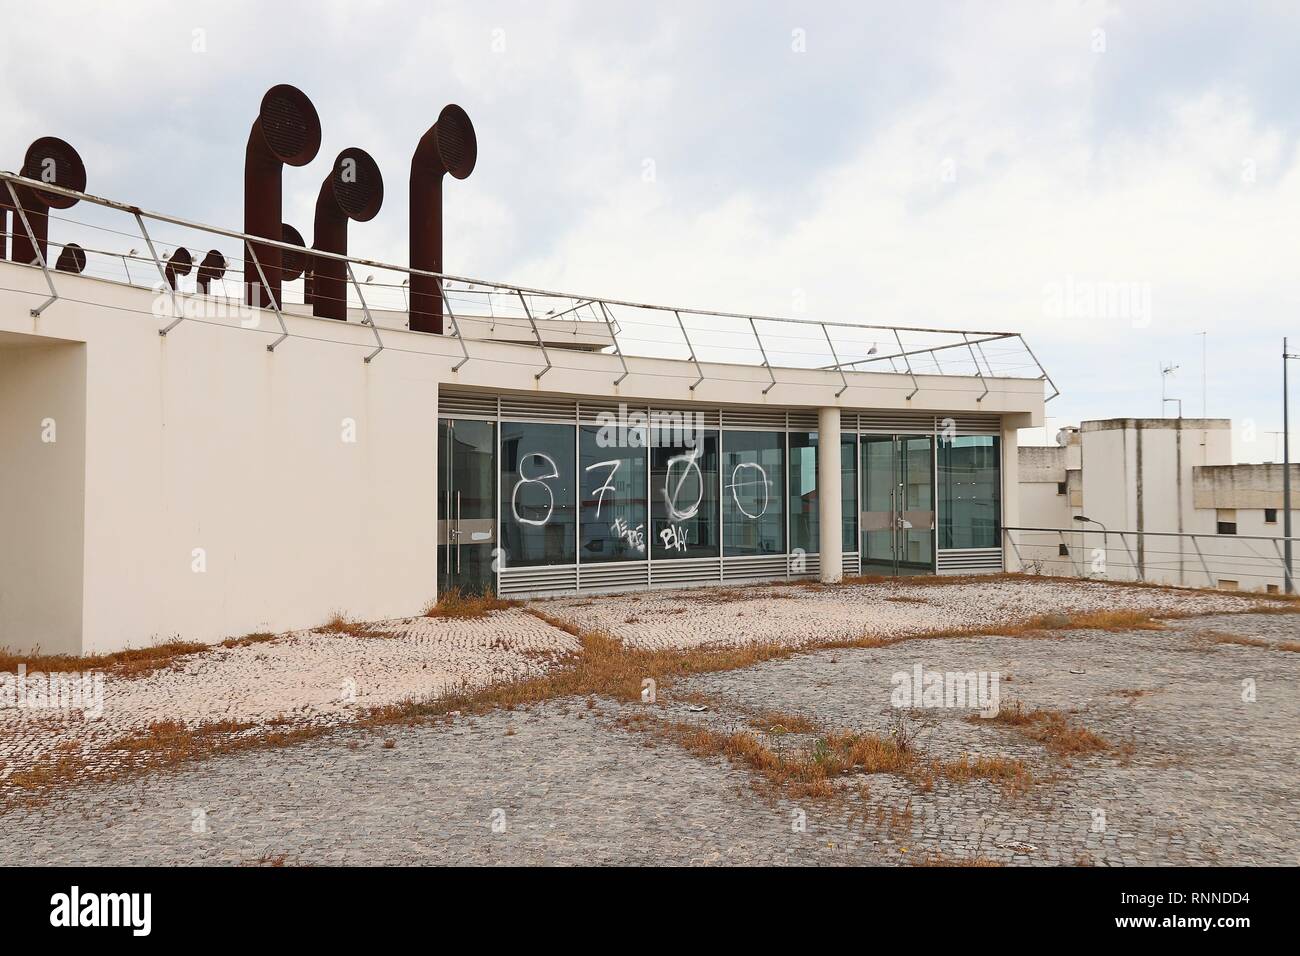 ALBUFEIRA, PORTUGAL - MAY 30, 2018: Abandoned architecture - dystopian view in Albufeira, Portugal. Portugese region Algarve has many abandoned buildi Stock Photo